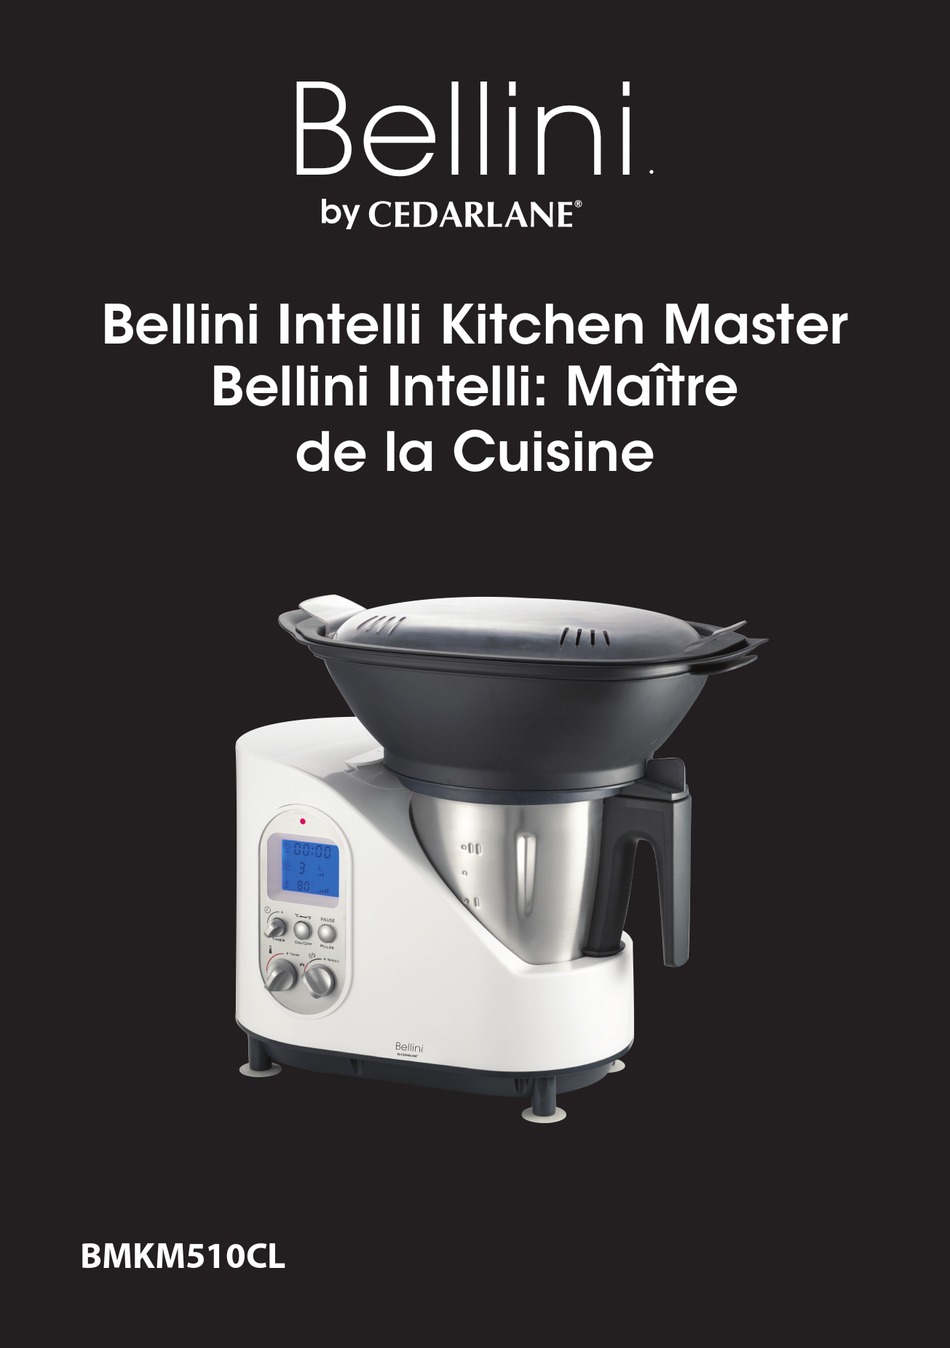 Cedarlane Bellini Intelli Kitchen Master 